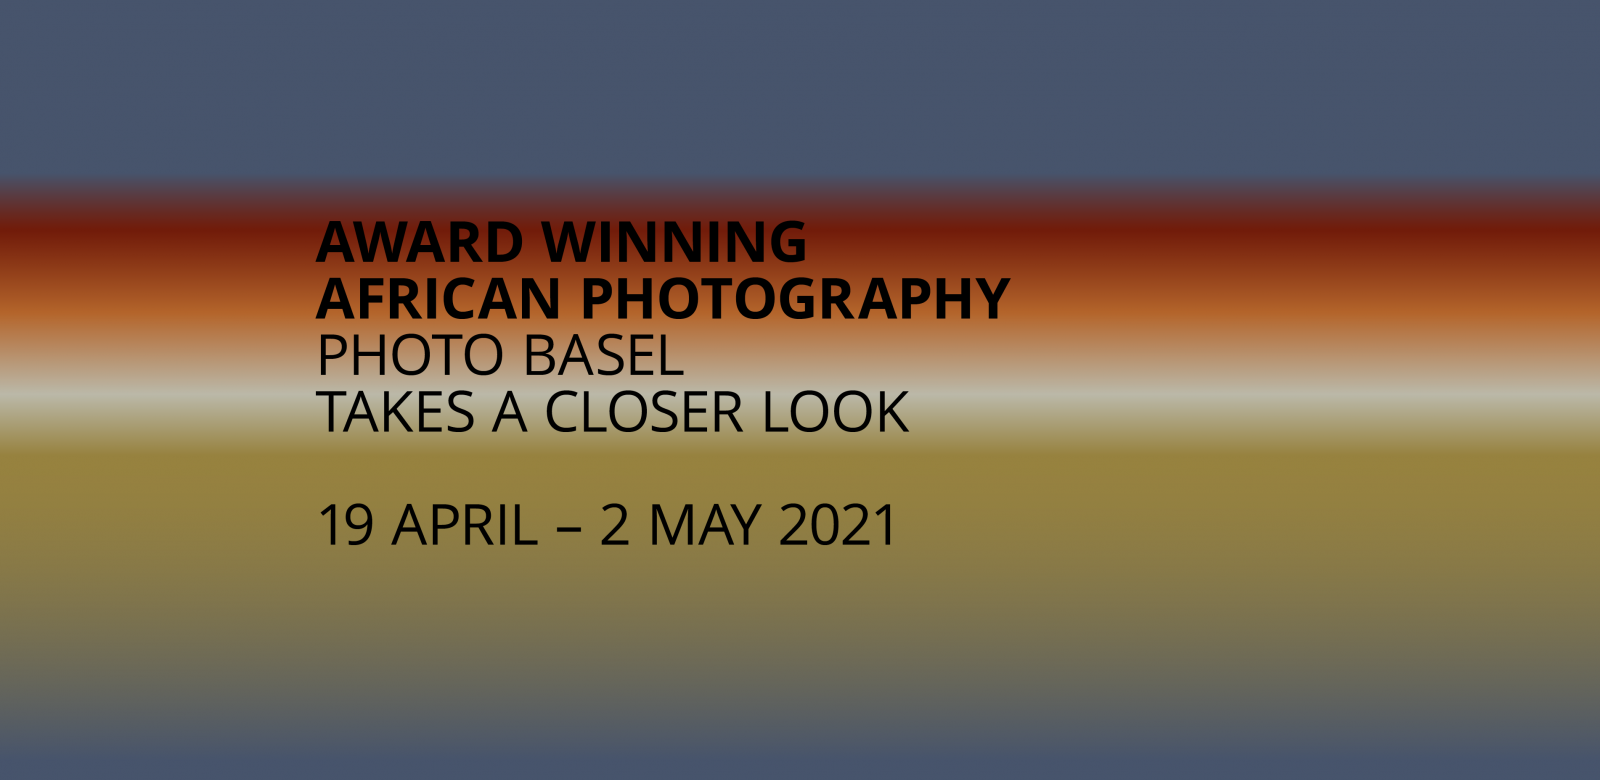 Thumbnail of Award Winning African Photography - photo basel Takes a Closer Look